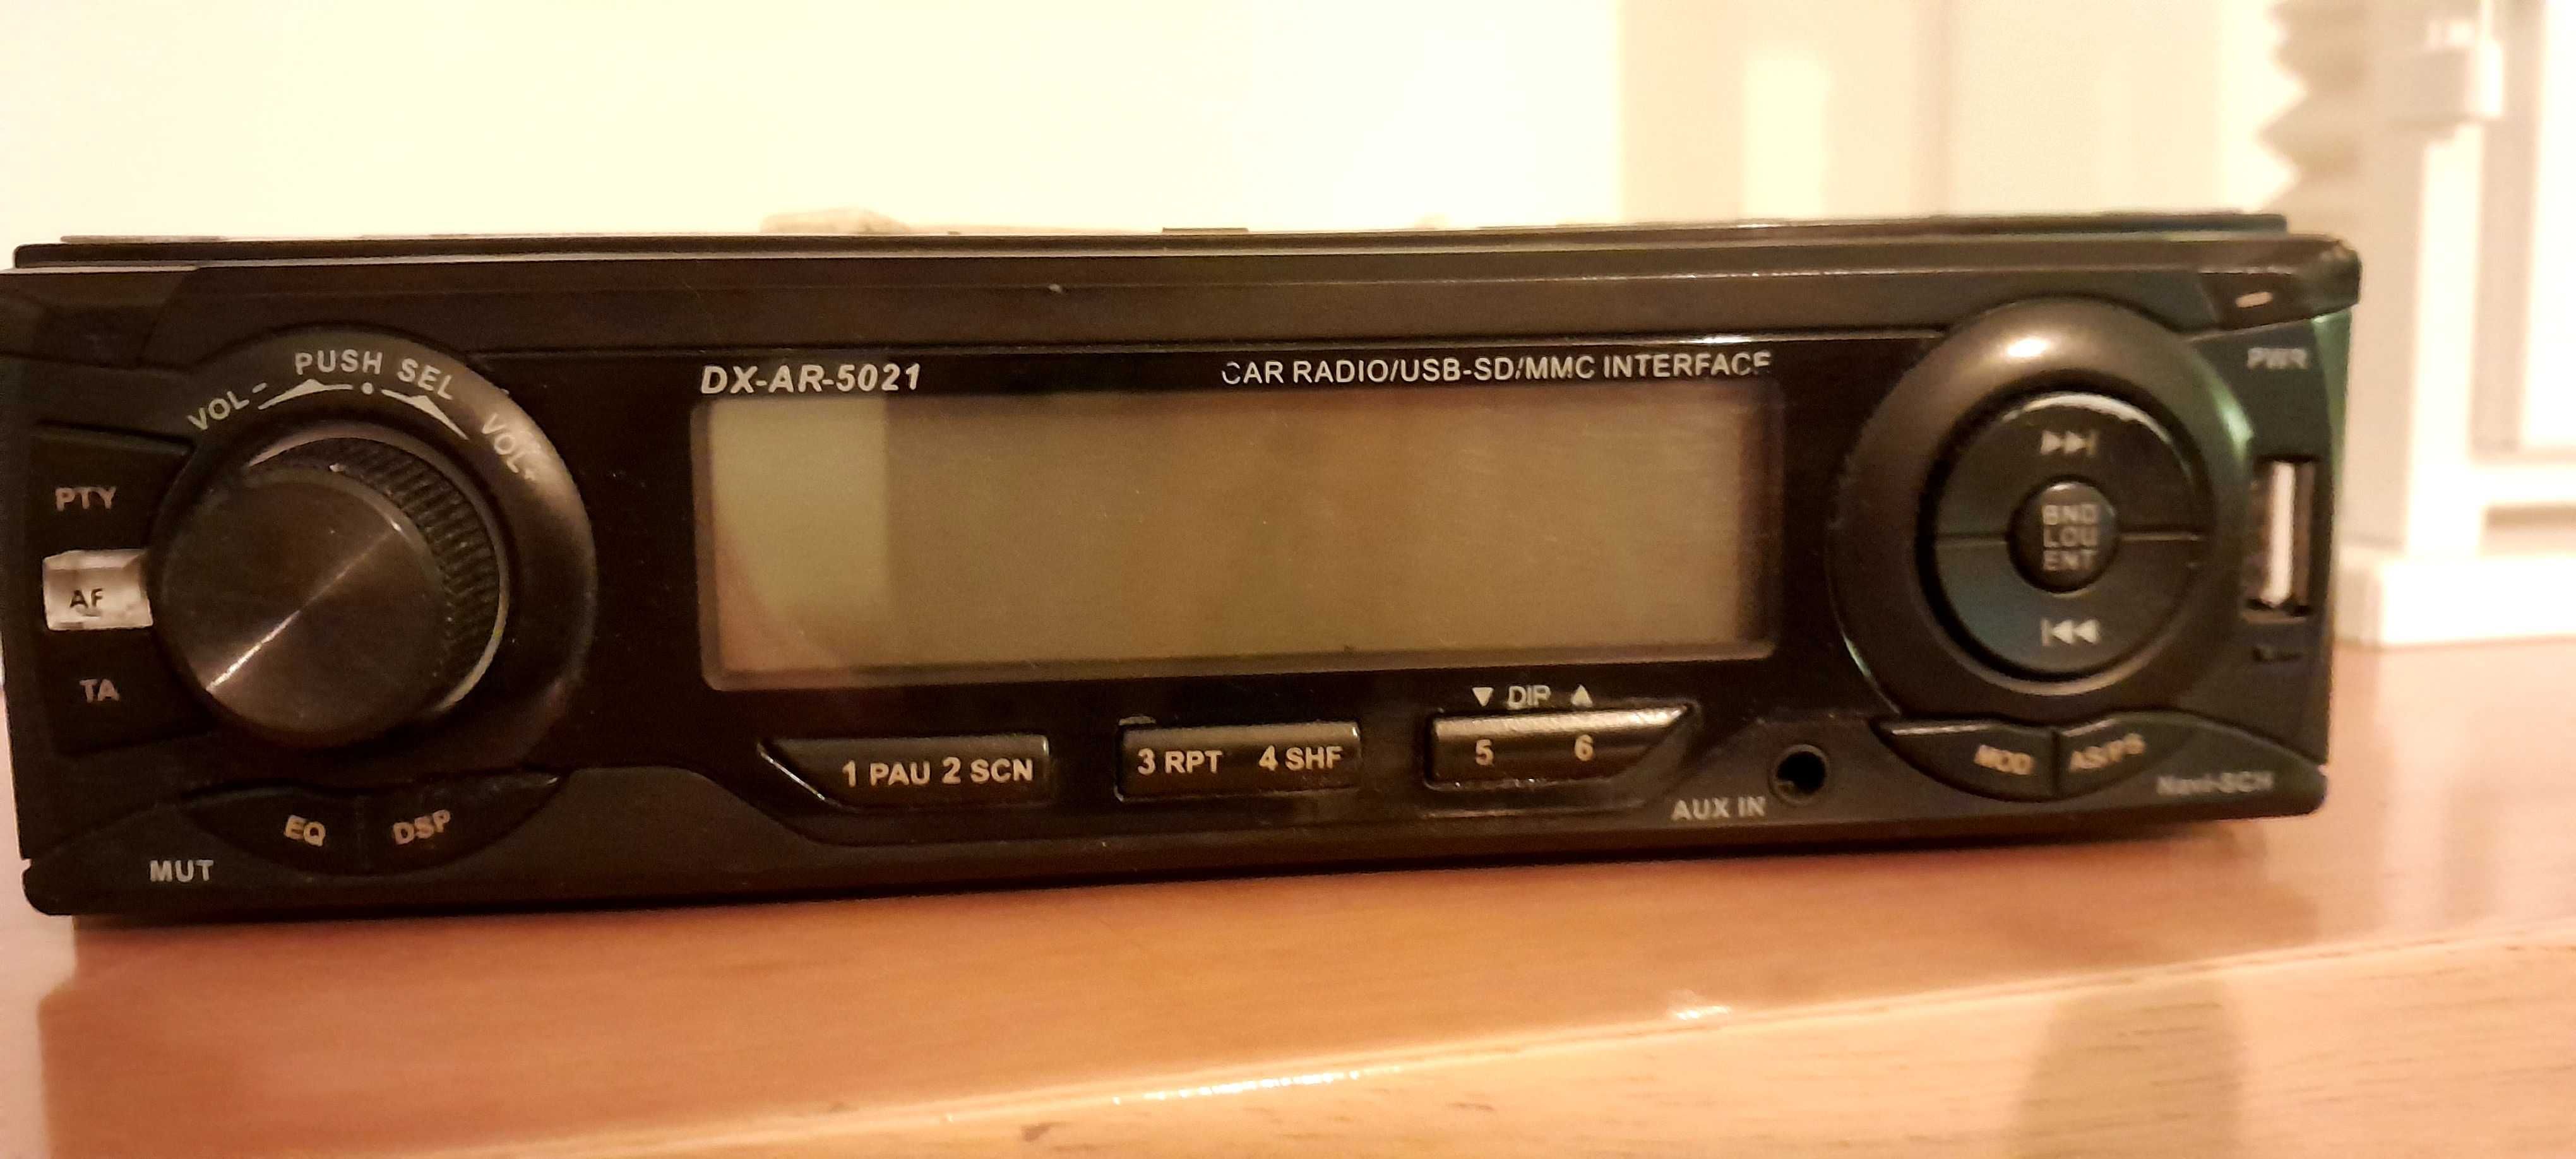 Auto rádio DX-AR 5021